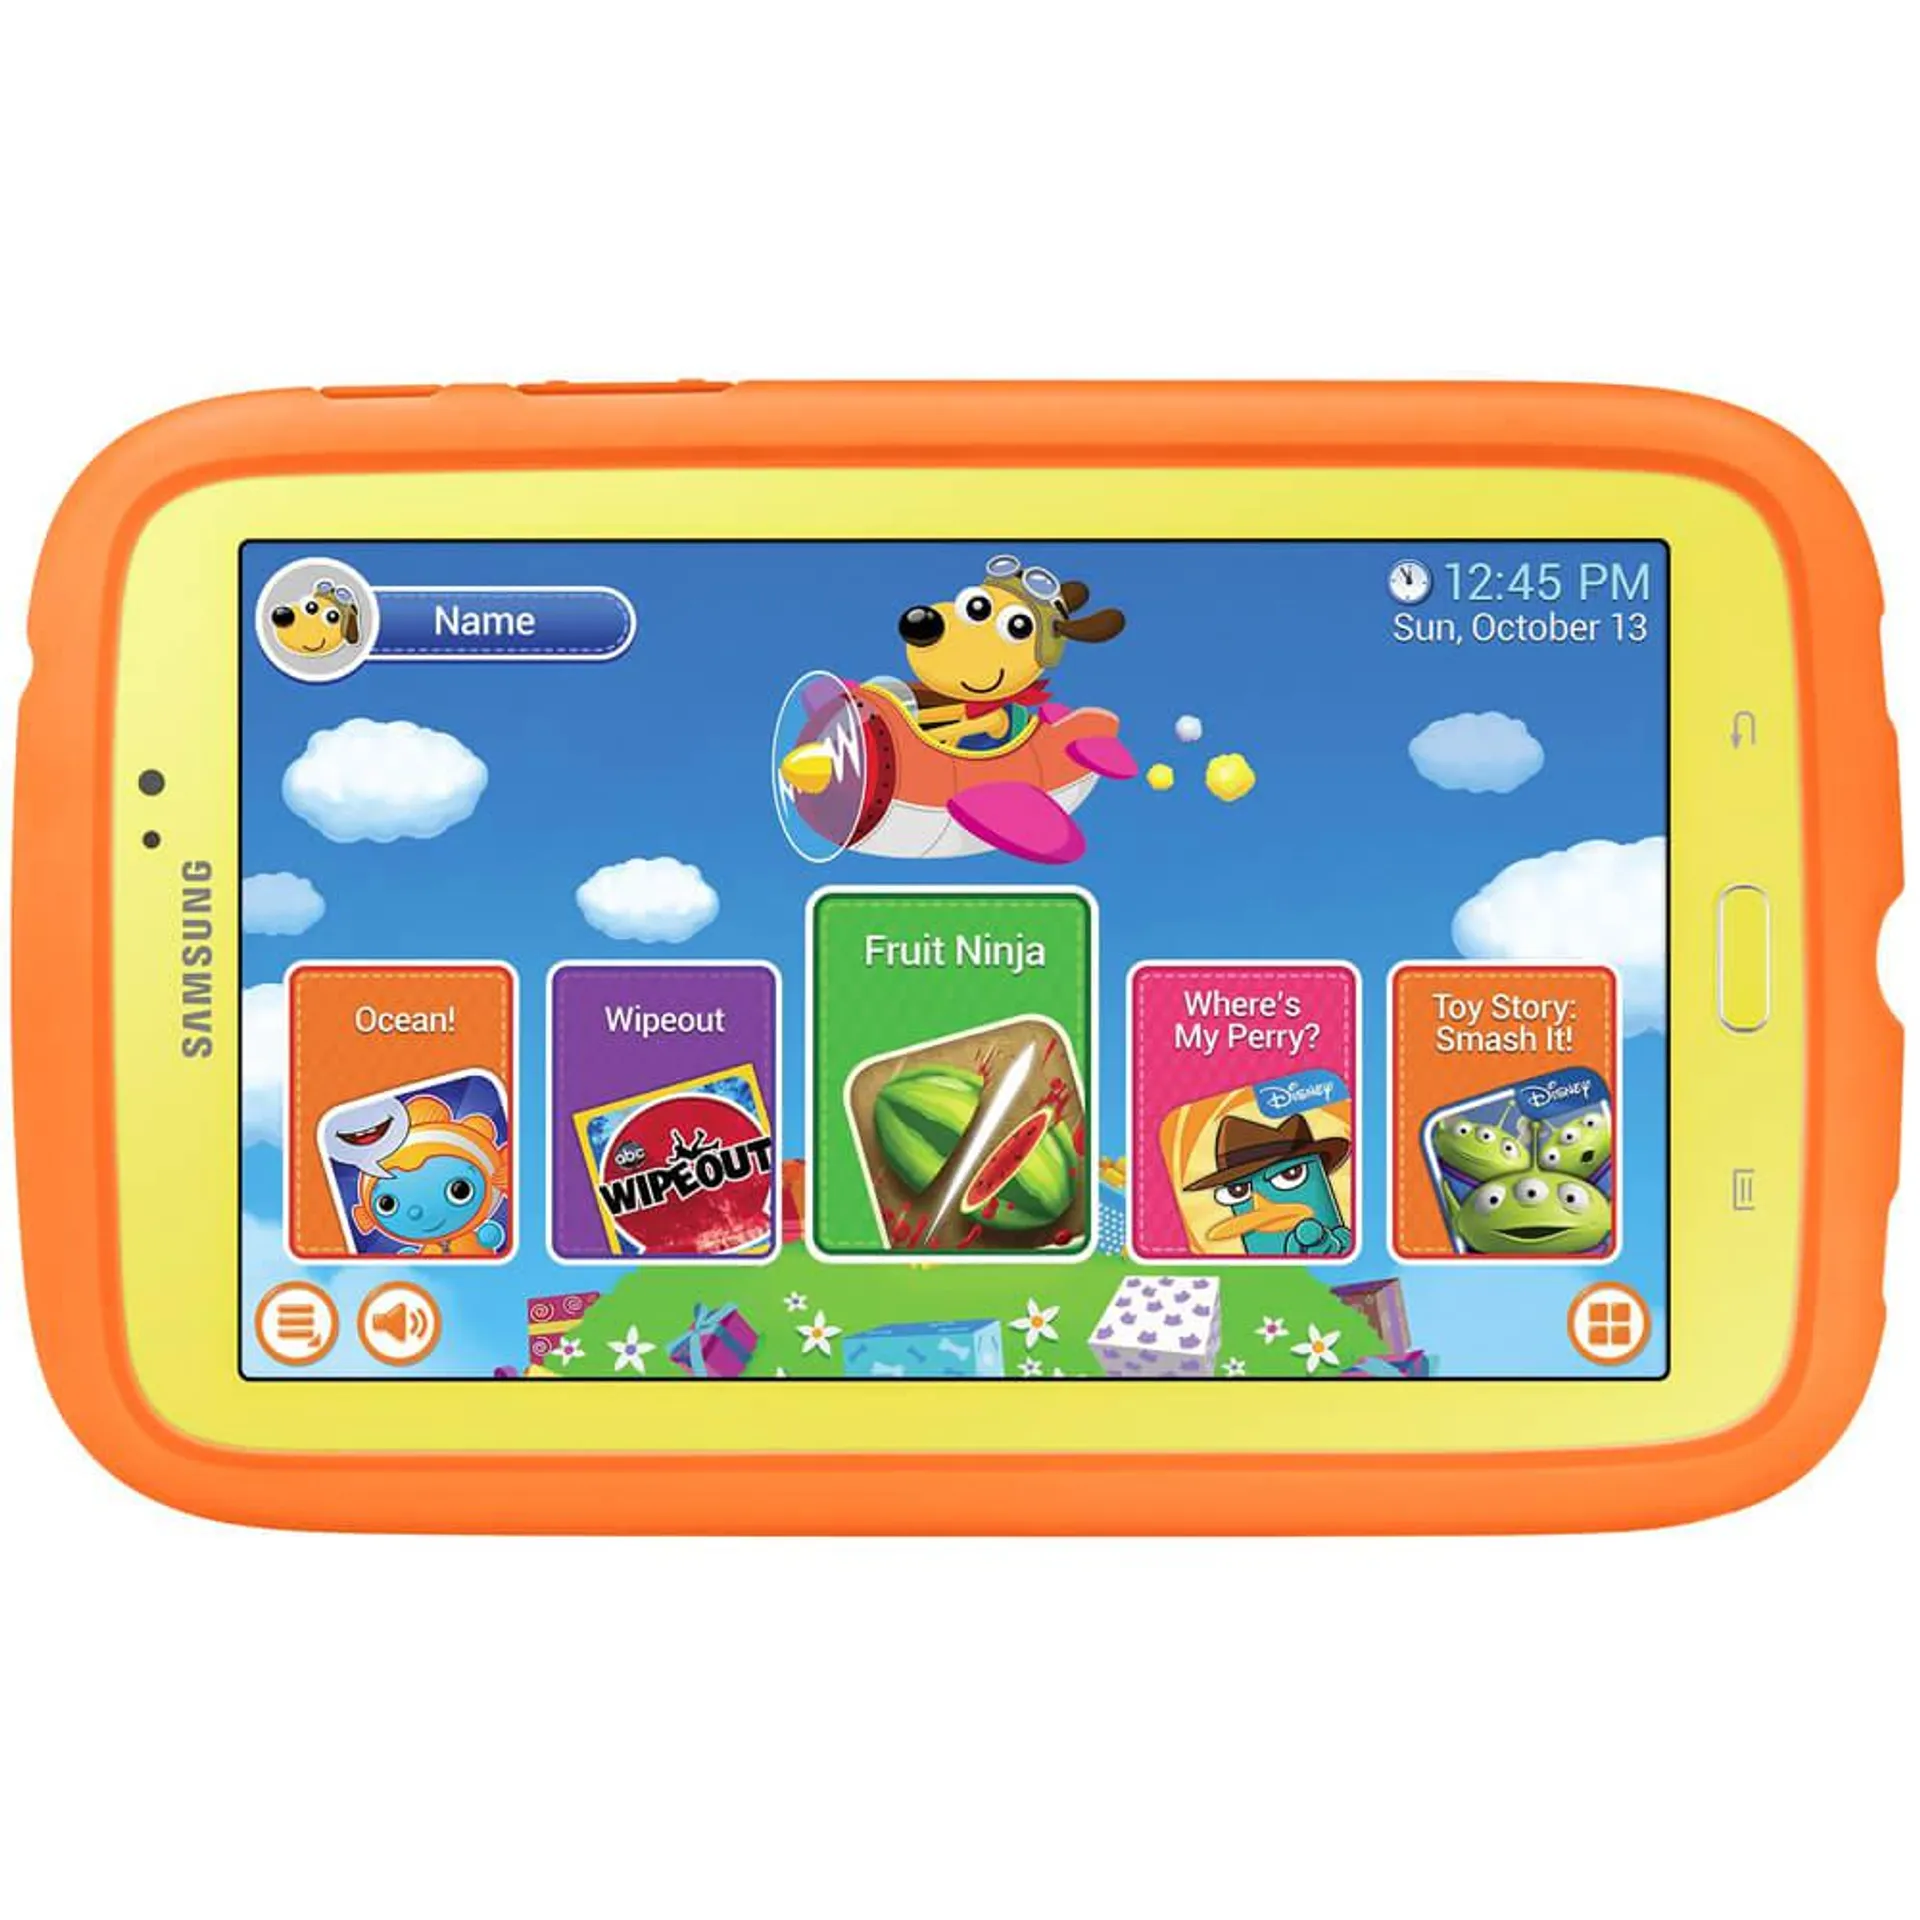 Galaxy Tab 3 7 inch Kid Edition Tablet - OPEN BOX